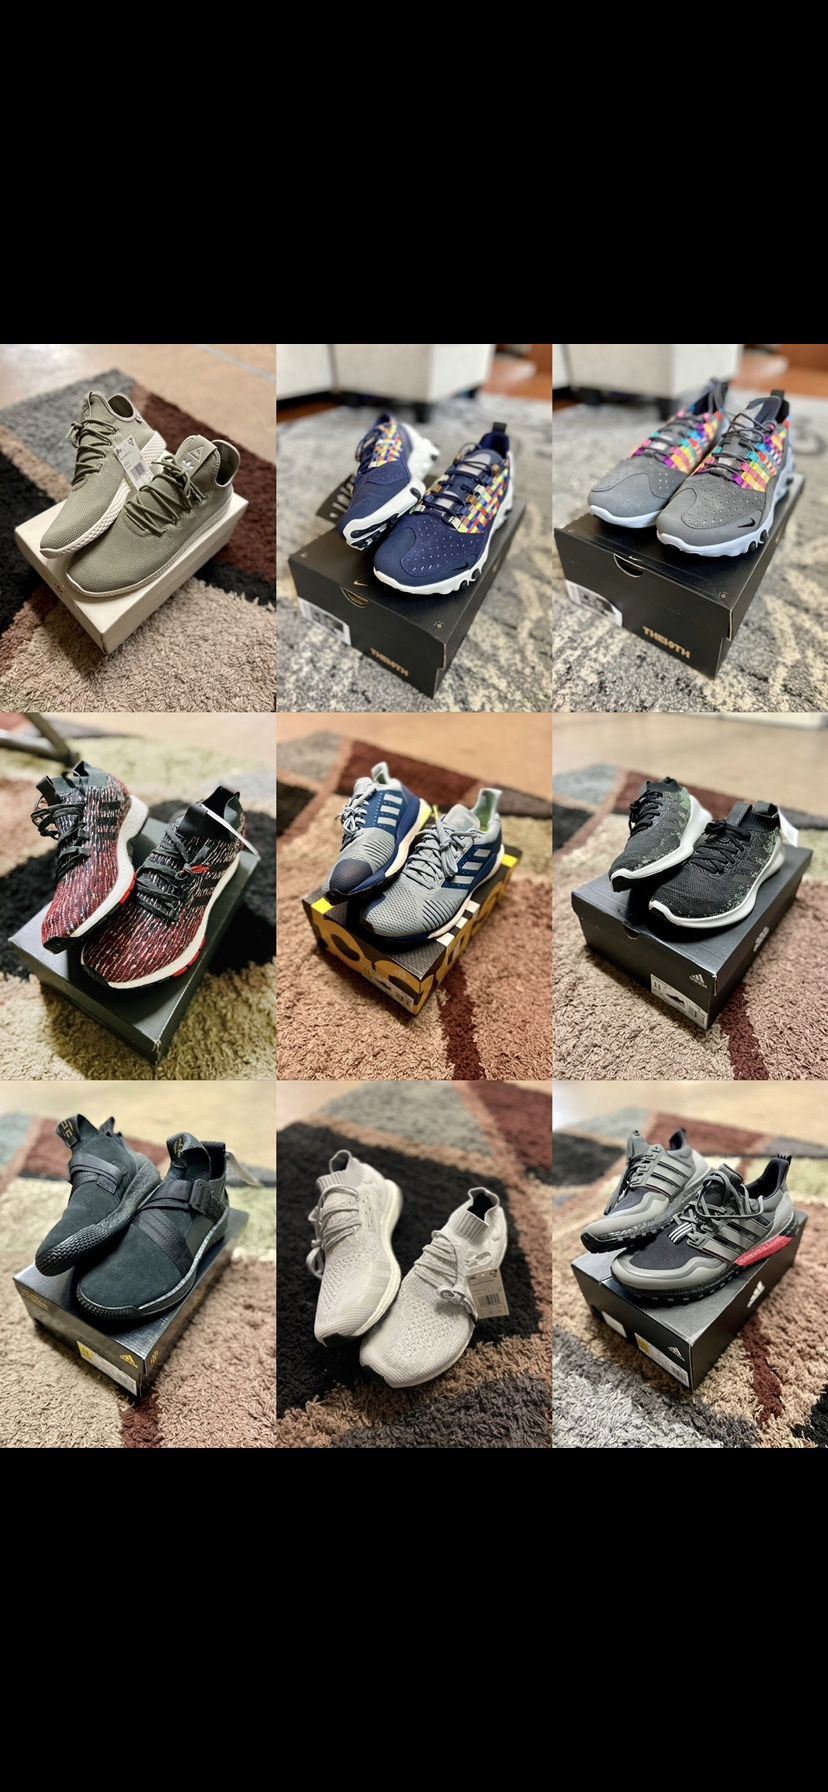 Adidas Originals Ultraboosts, Solarboosts, Pureboosts, Purebounce, Pharrell, Harden, and Nike React Sertu - Sizes 11, 11.5, 12